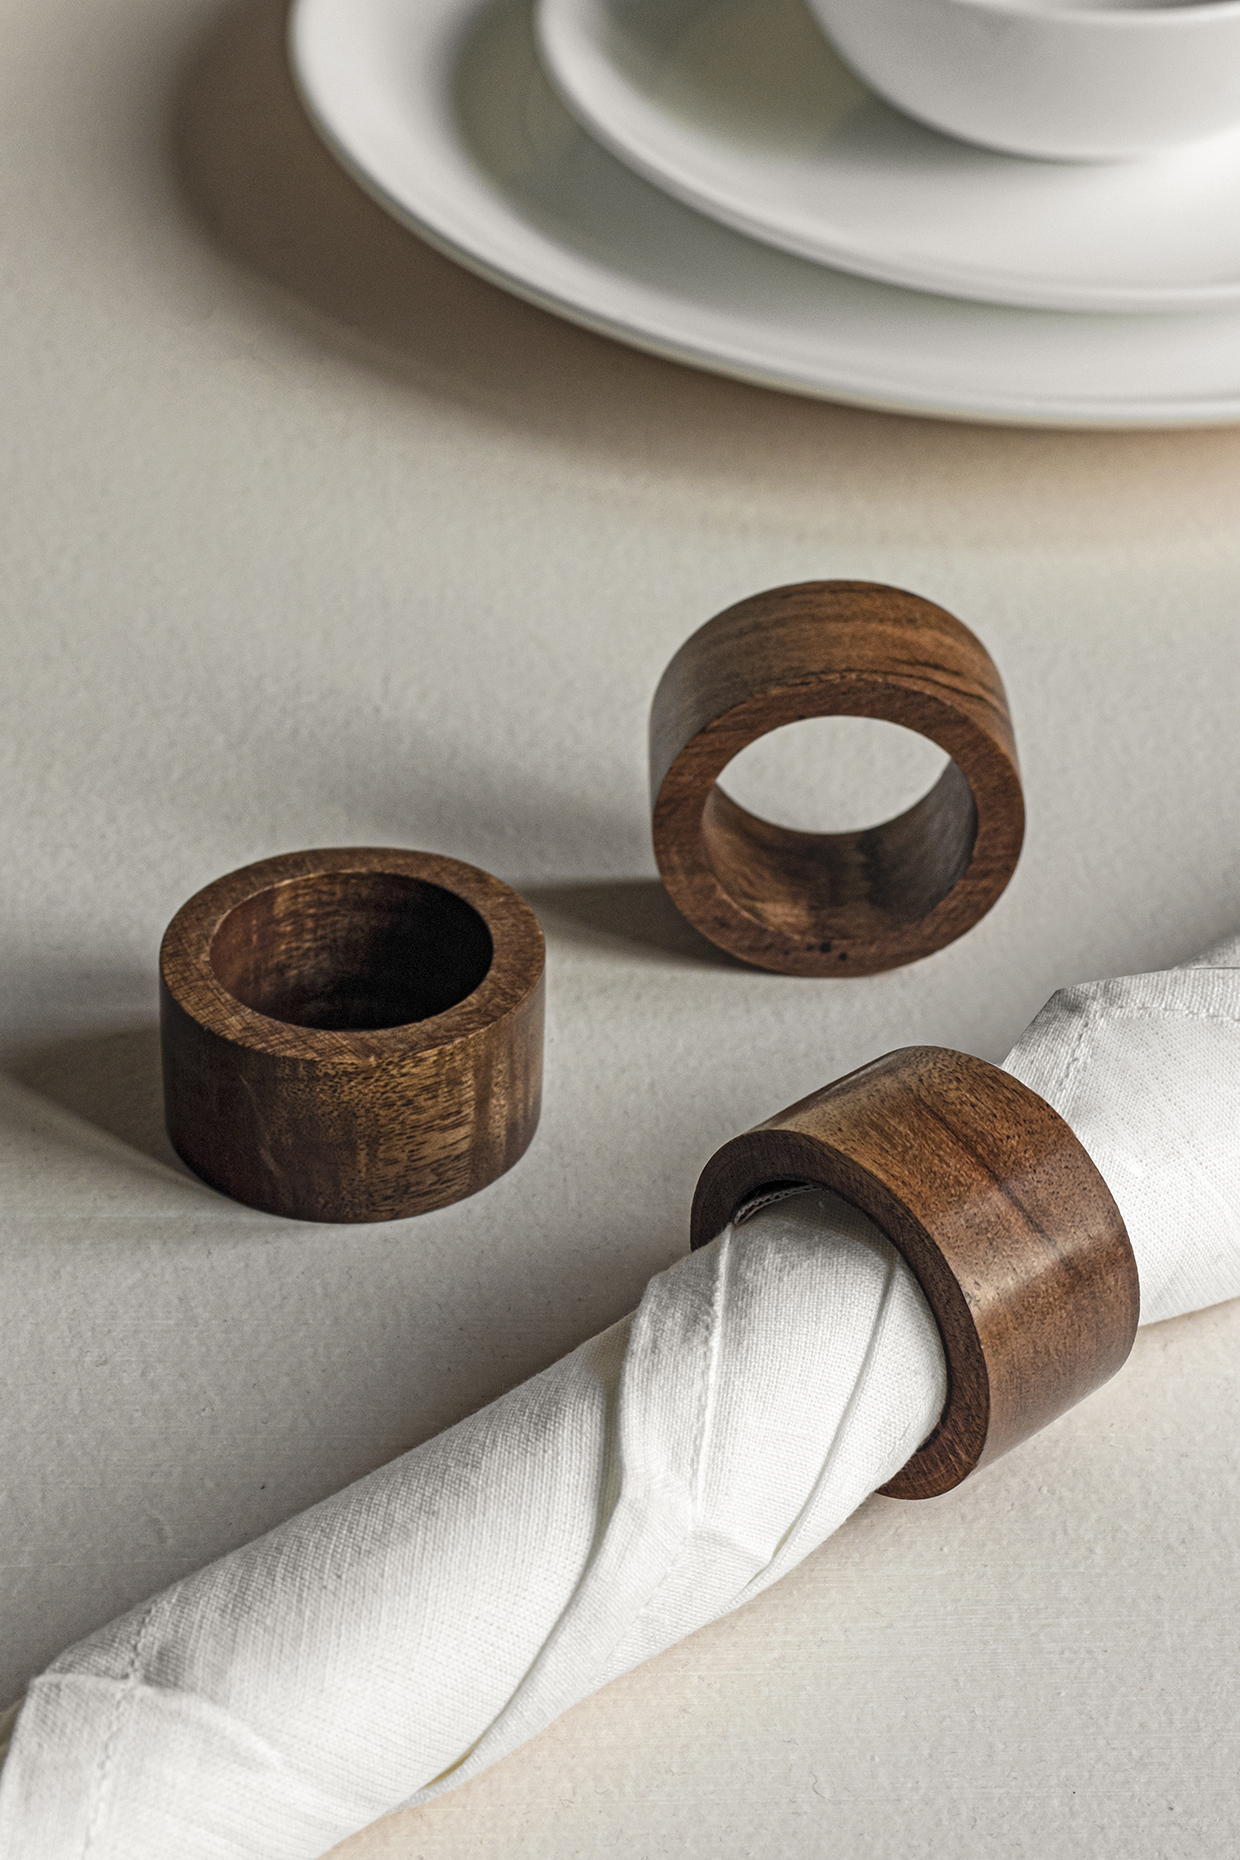 Natural Brown Mango Wood Round Napkin Rings Design by Silken at